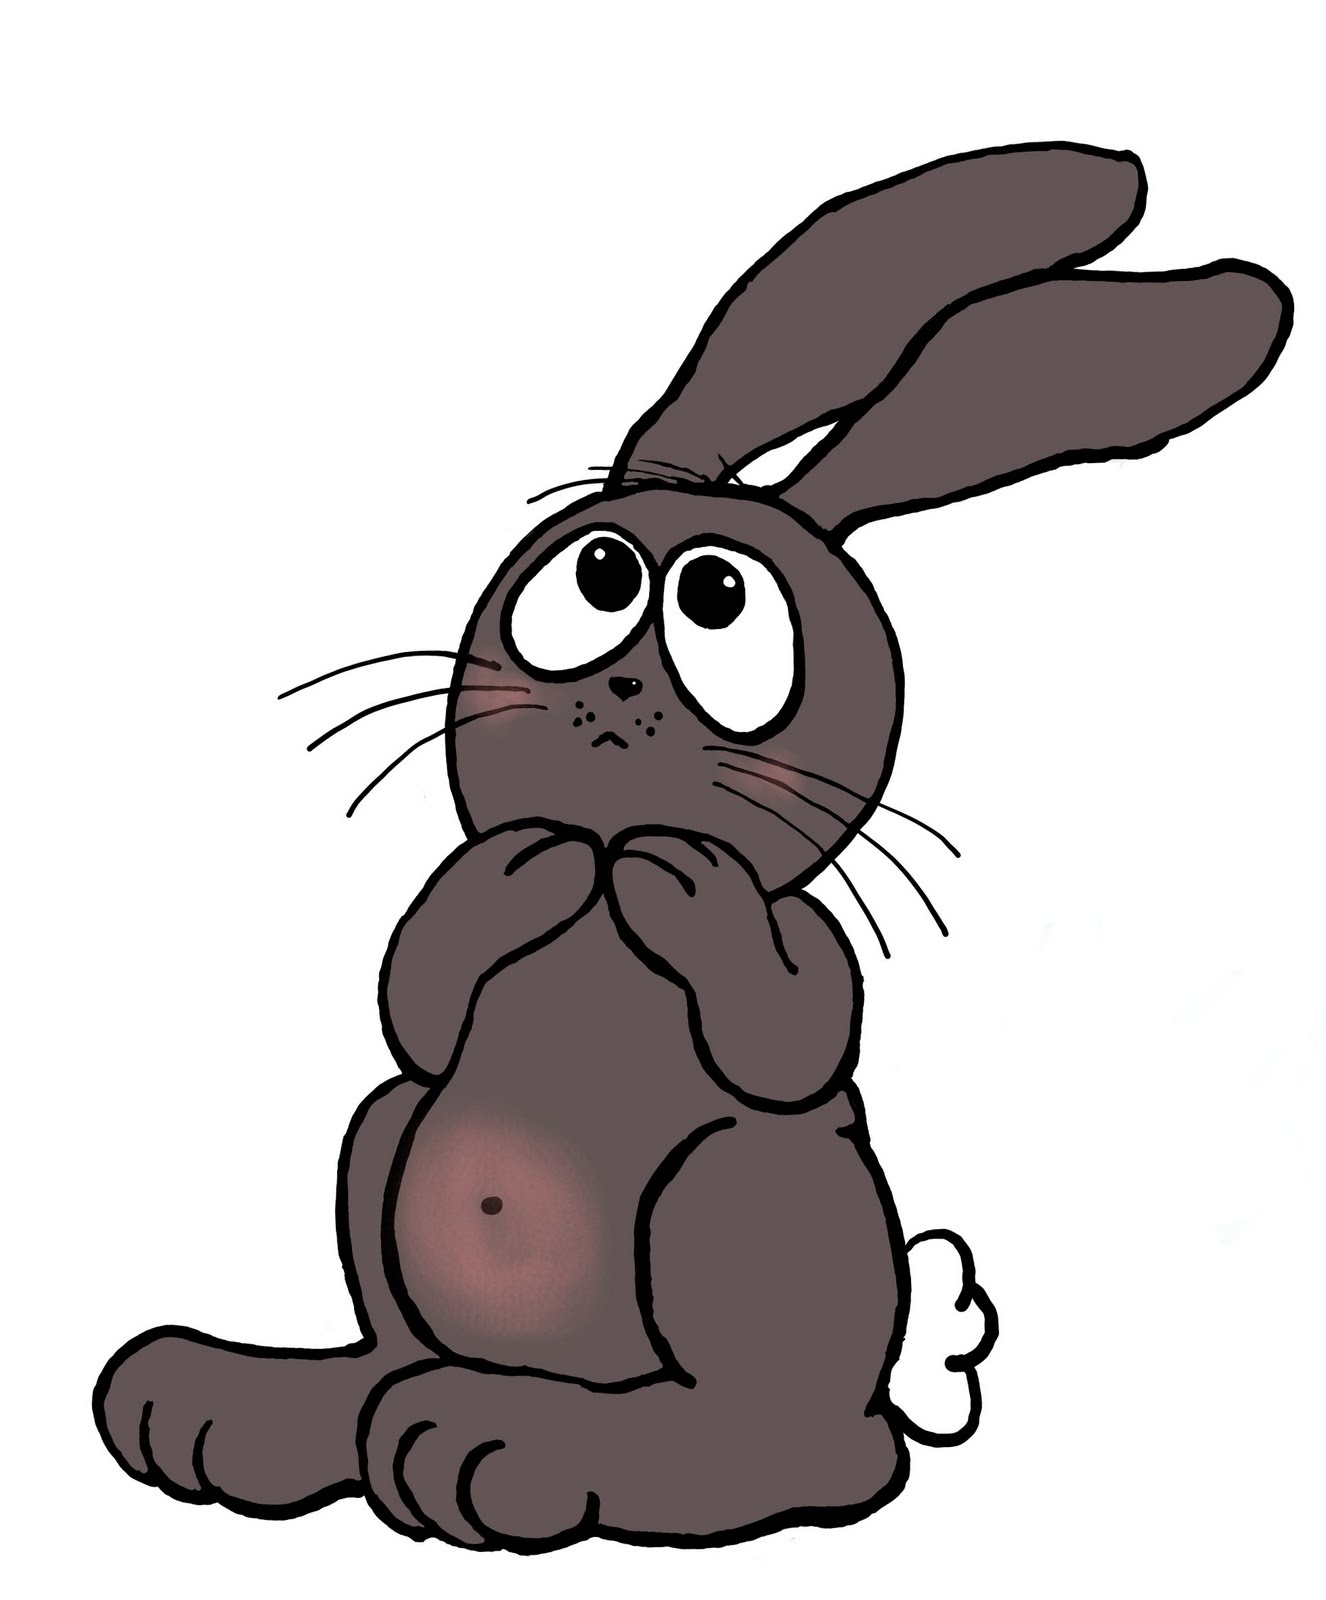 Free Rabbit Images Cartoon Download Free Clip Art Free Clip Art